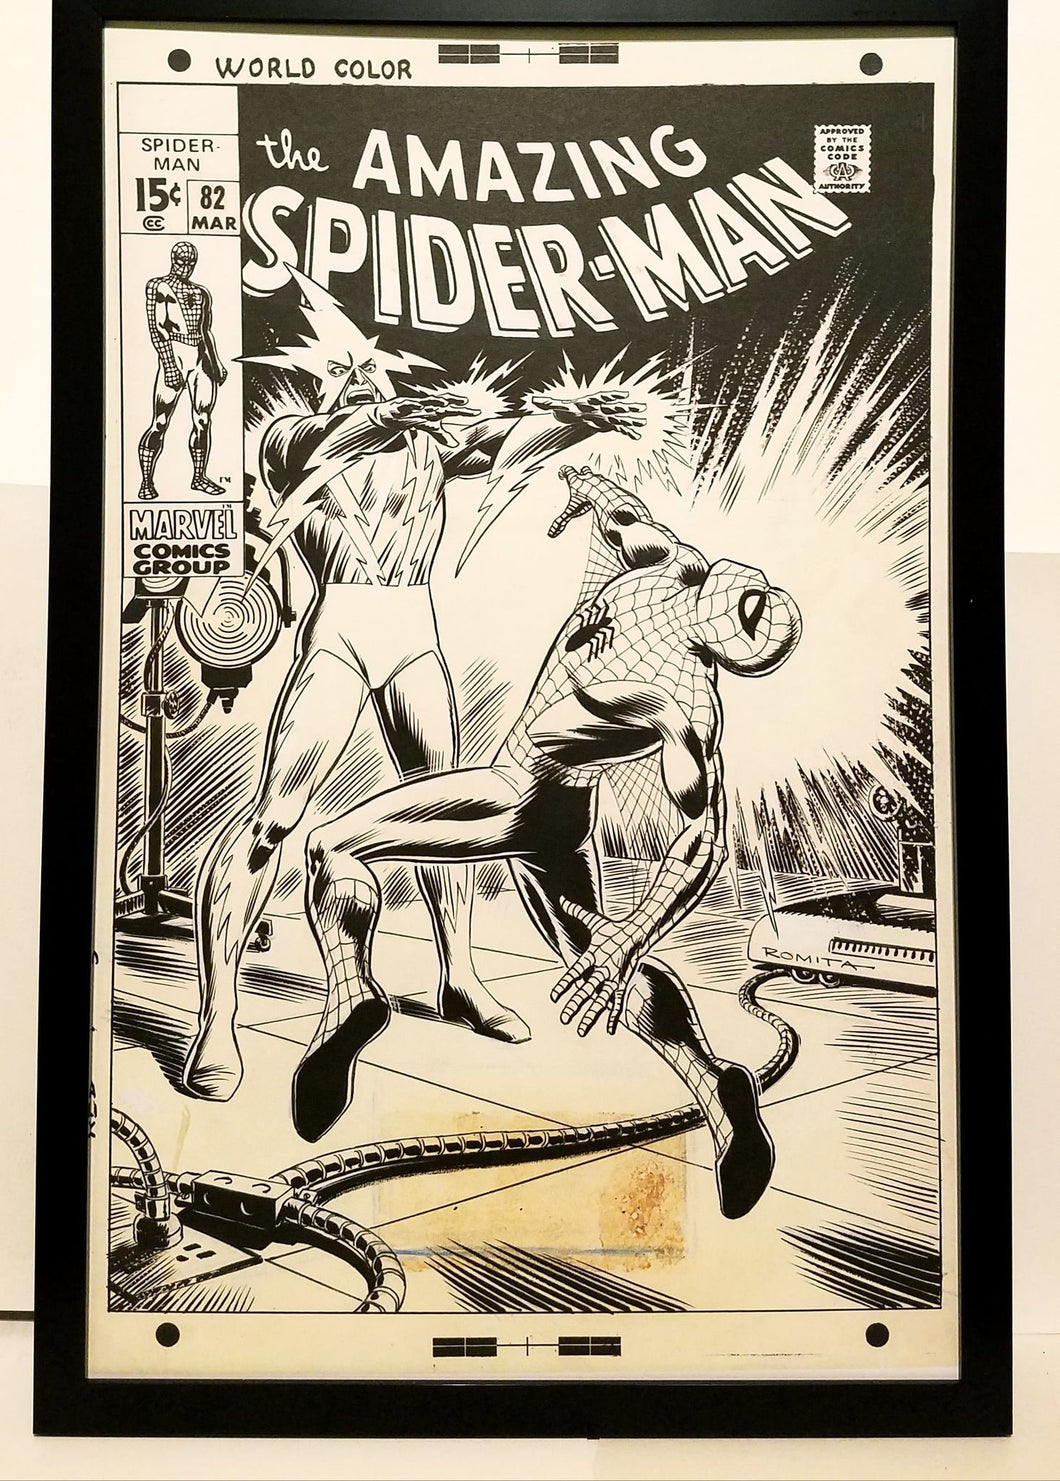 Amazing Spider-Man #82 Variant by John Romita 11x17 FRAMED Original Art Poster Marvel Comics Poster